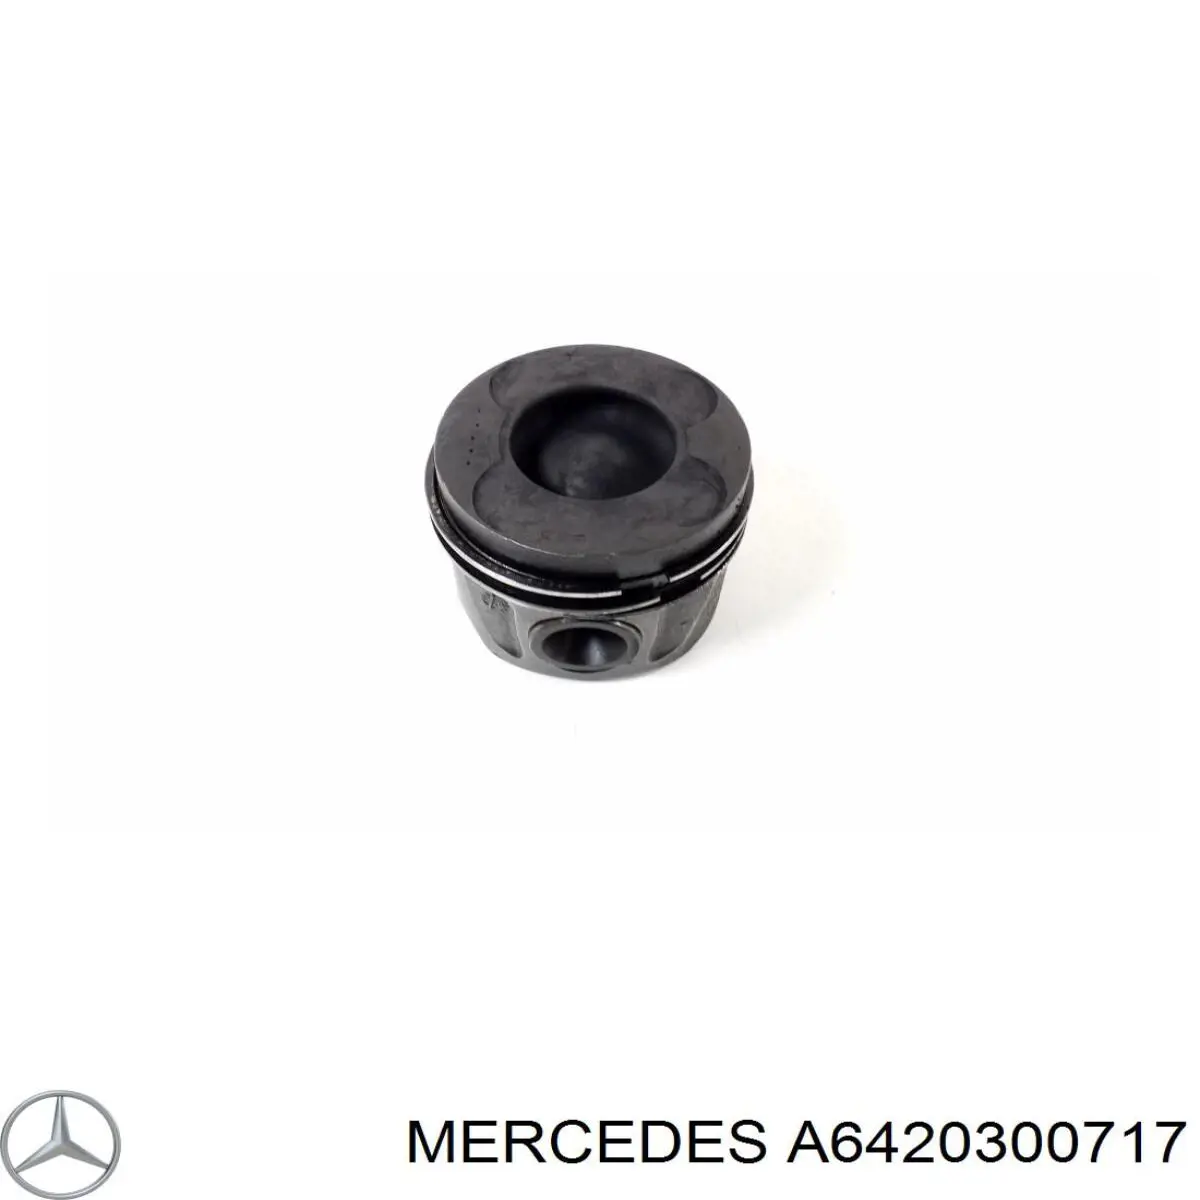 Поршень в комплекте на 1 цилиндр, STD Mercedes A6420300717